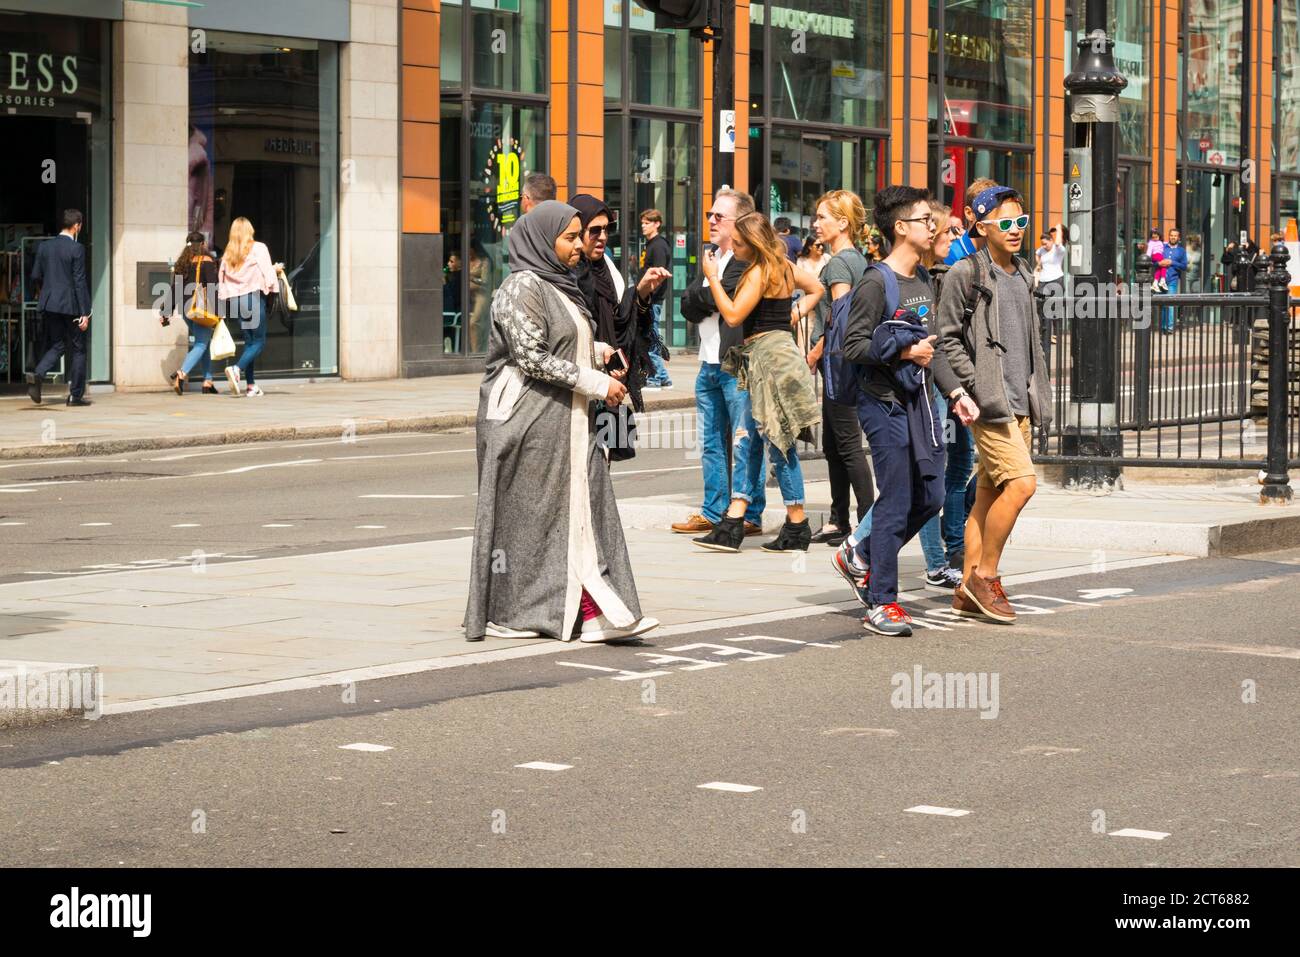 London West End Knightsbridge street scene shoppers pedestrian crossing road young people Arab Muslim girls hijabs abayas shop windows Stock Photo